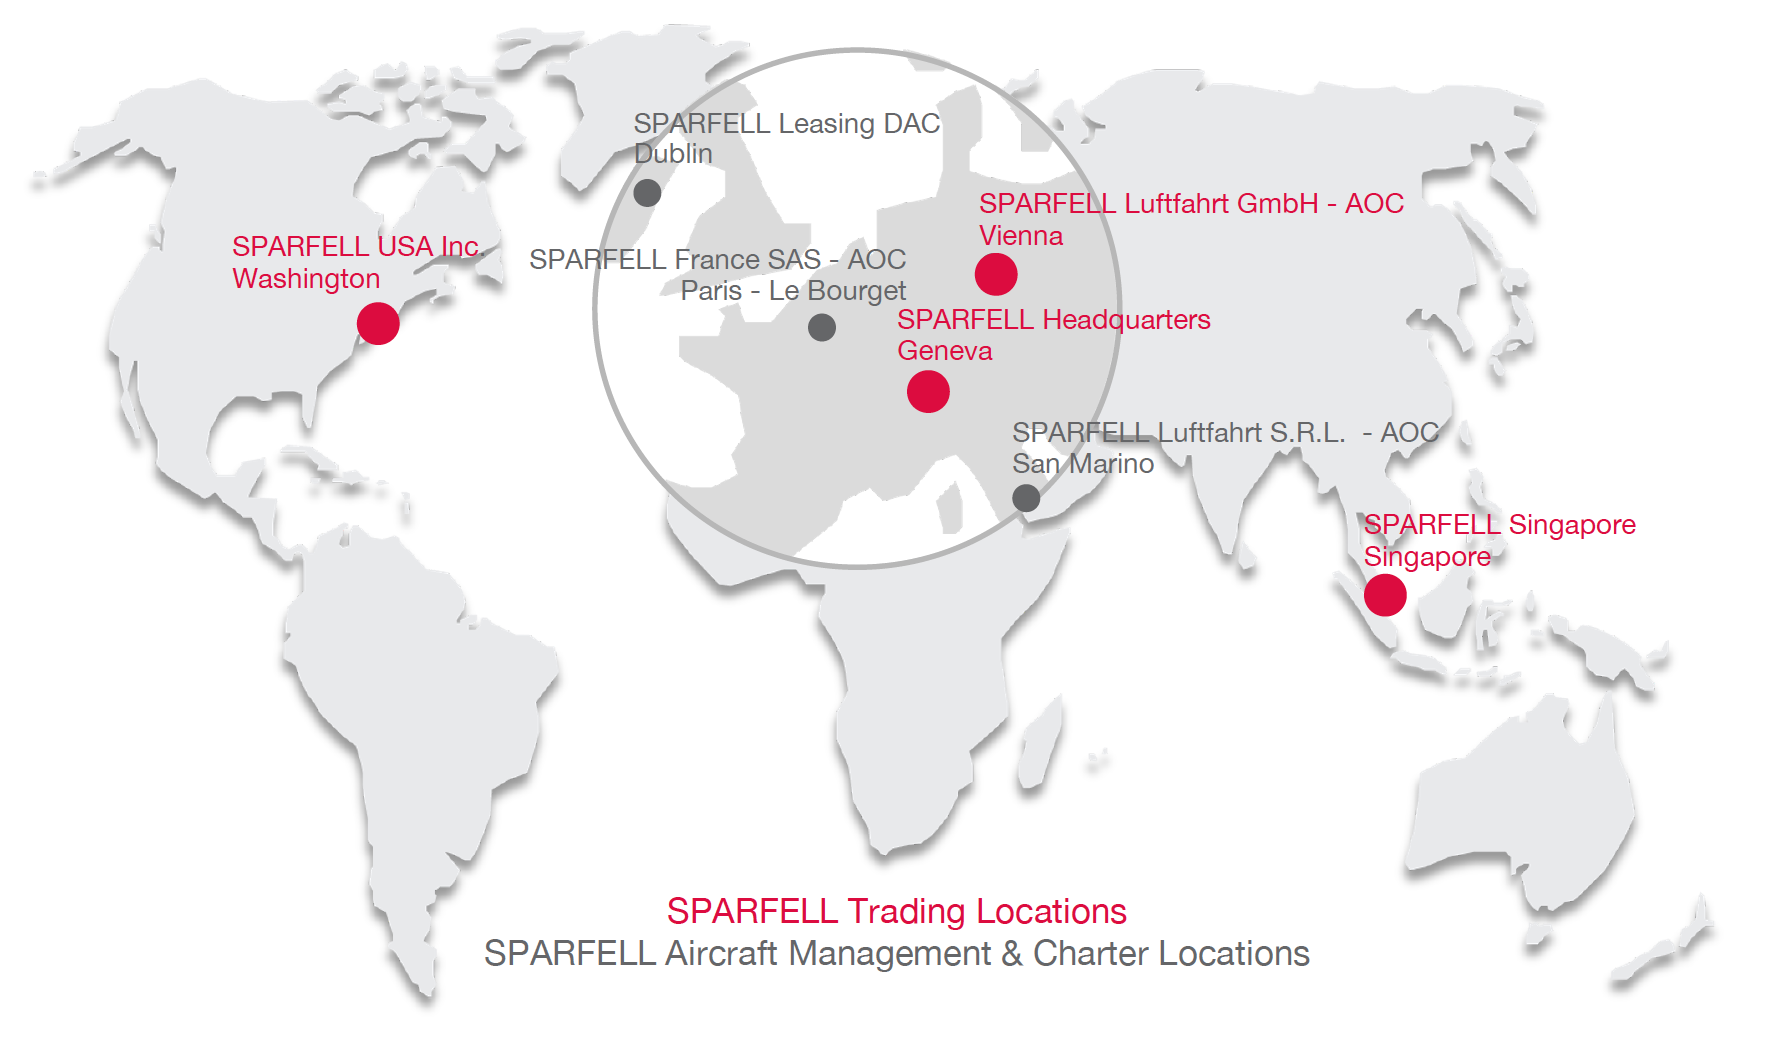 SPARFELL Global Trading Subsidiaries - Washington, Geneva, Vienna and Singapore